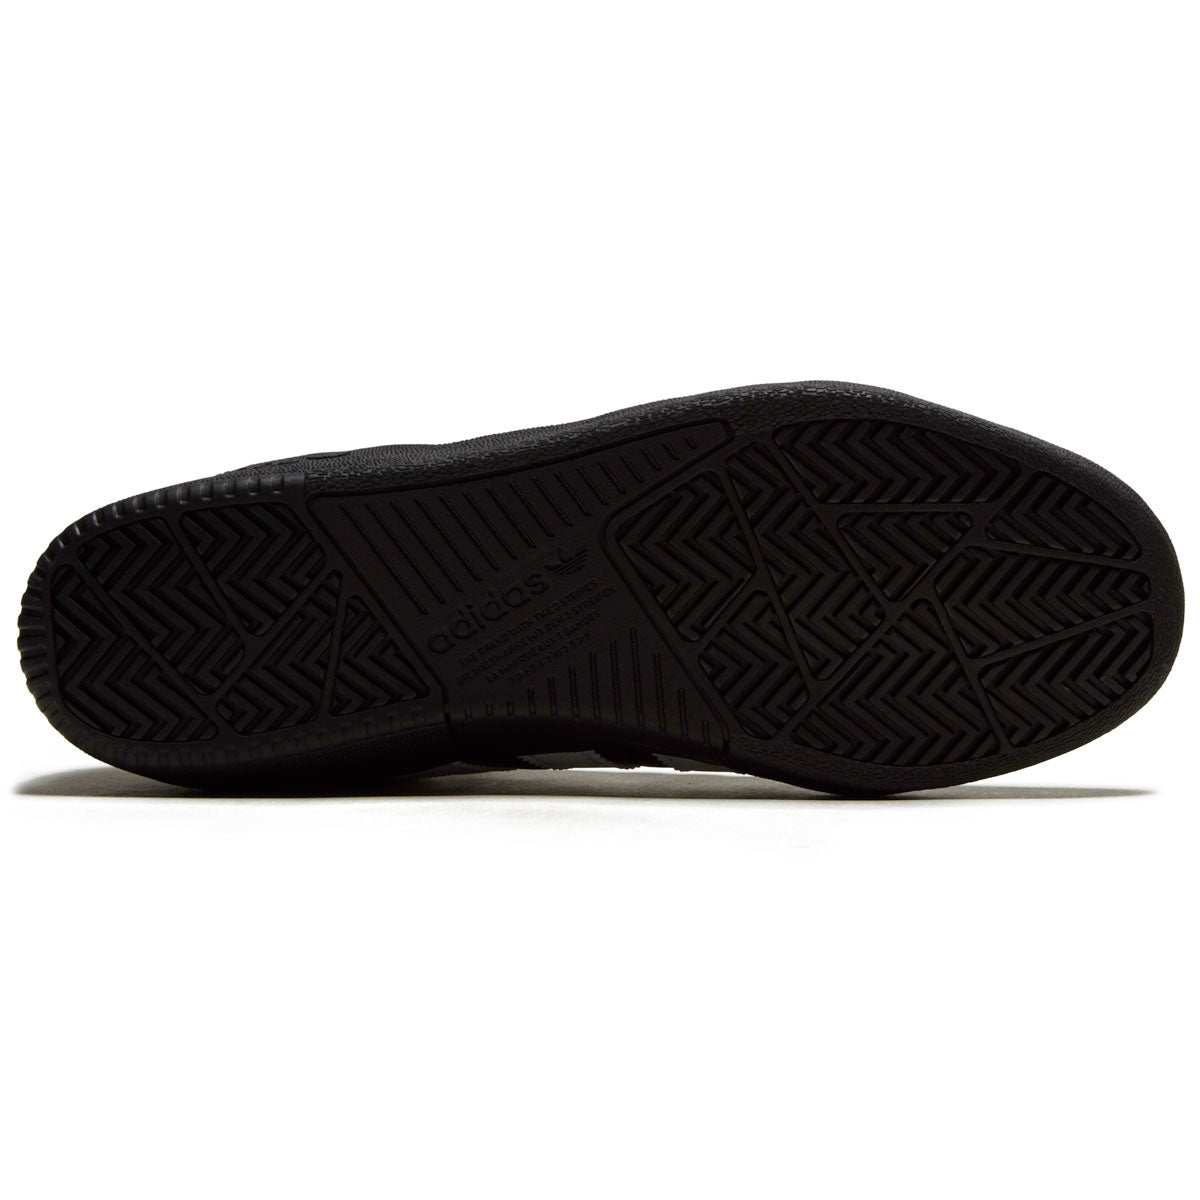 Adidas Tyshawn Shoes - Core Black/White/Gold Metallic image 4